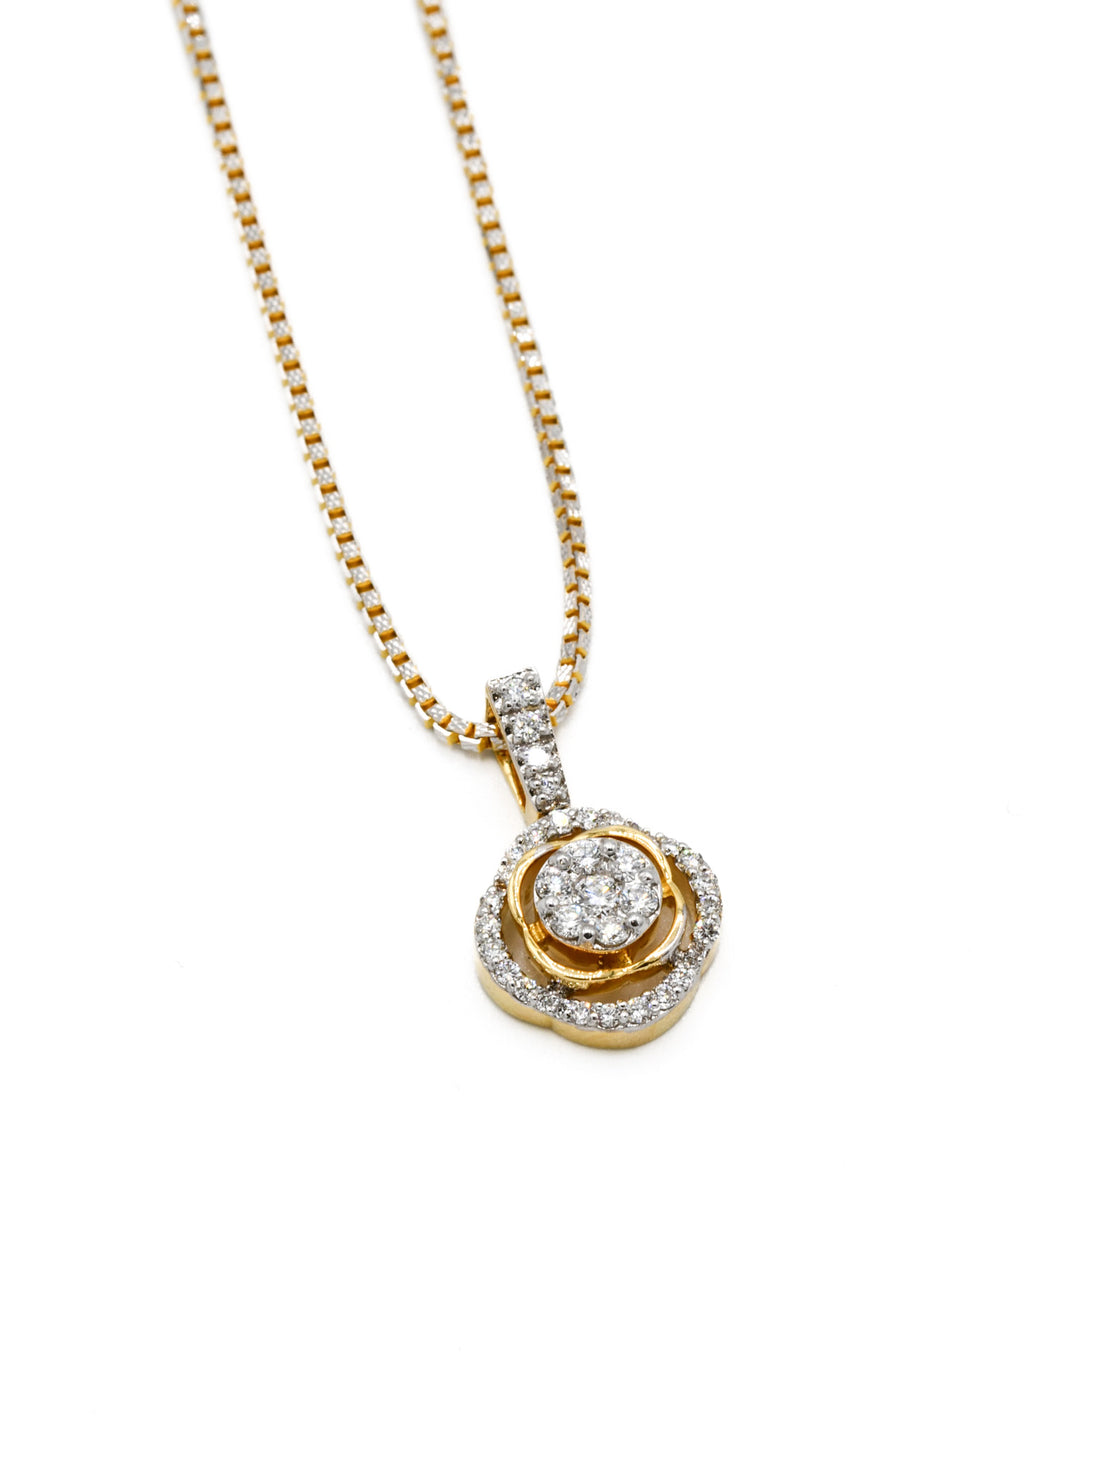 18ct Gold Diamond Pendant - 0.32 cts - Roop Darshan